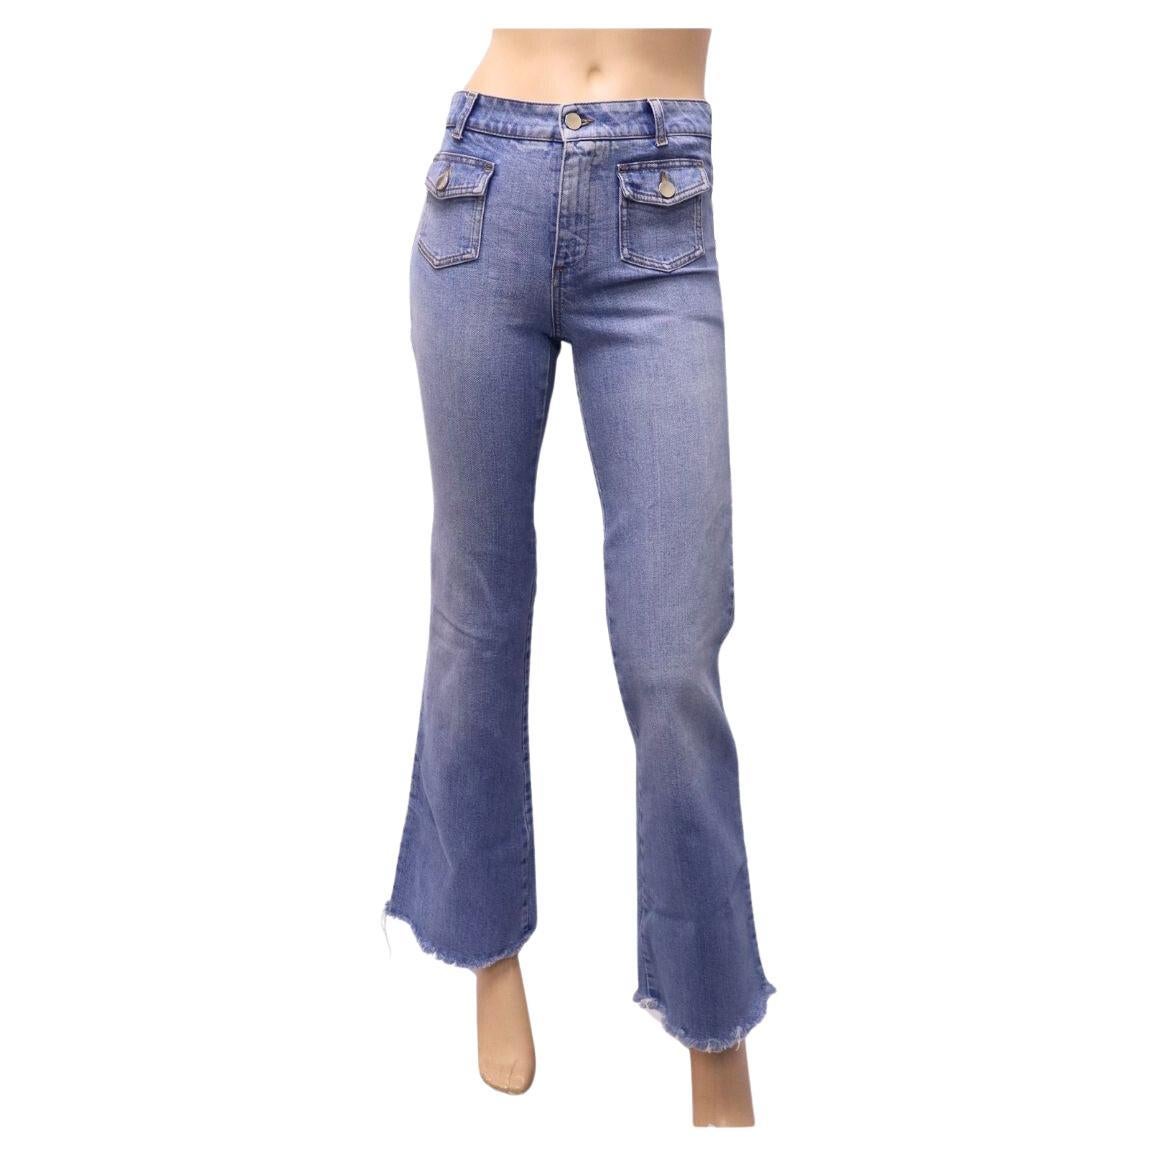 Stella McCartney high-rise flared jeans size EU 36 For Sale